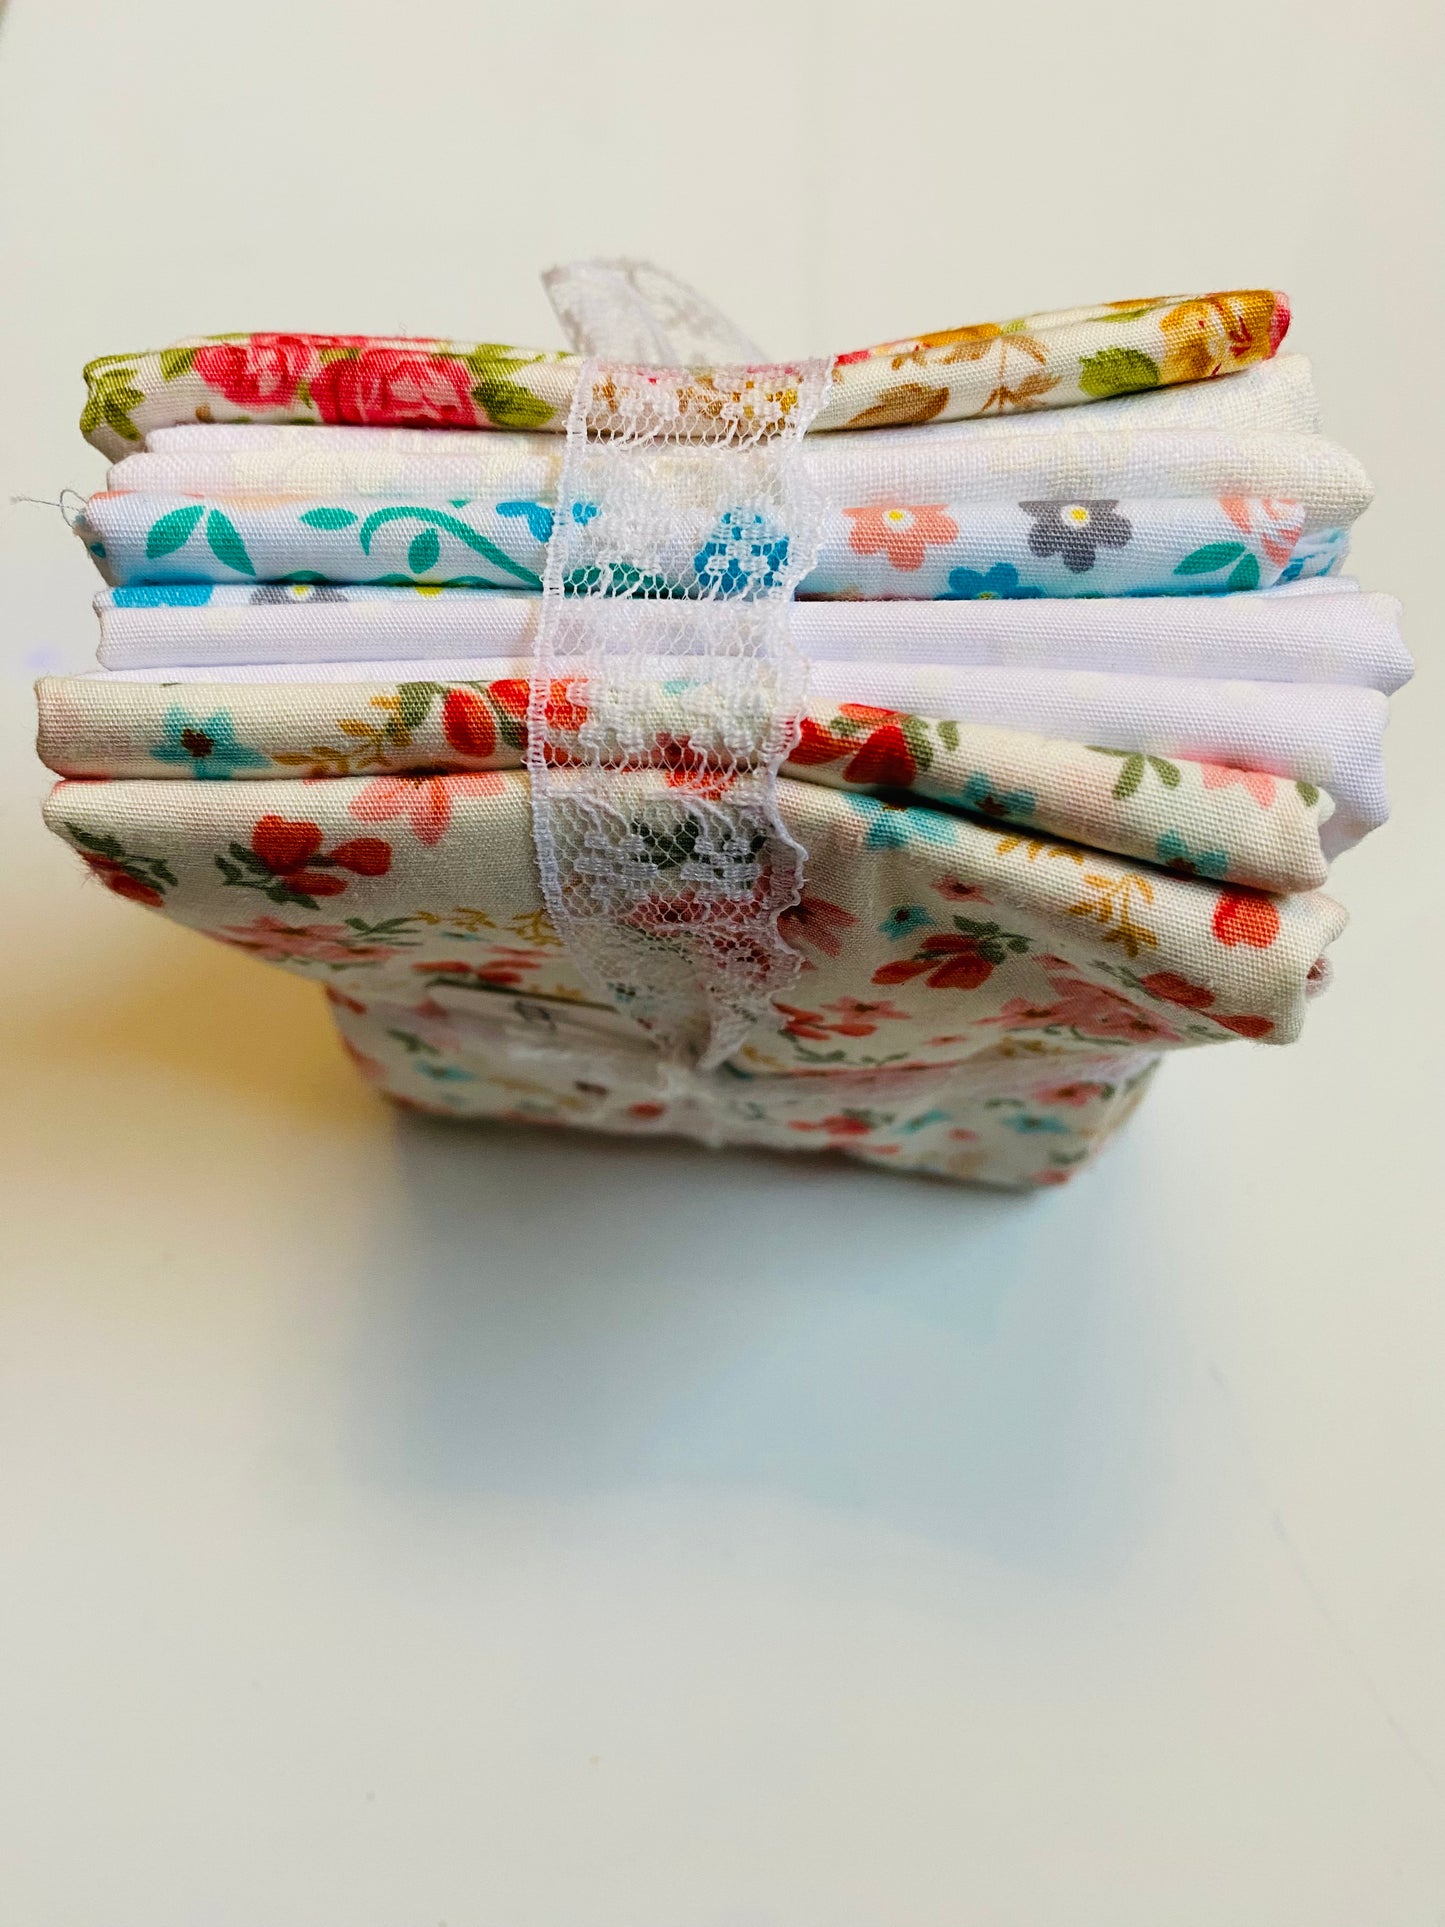 Fabric Fat Quarter Bundle - 'Spring Whites & Pinks' - 100% Cotton